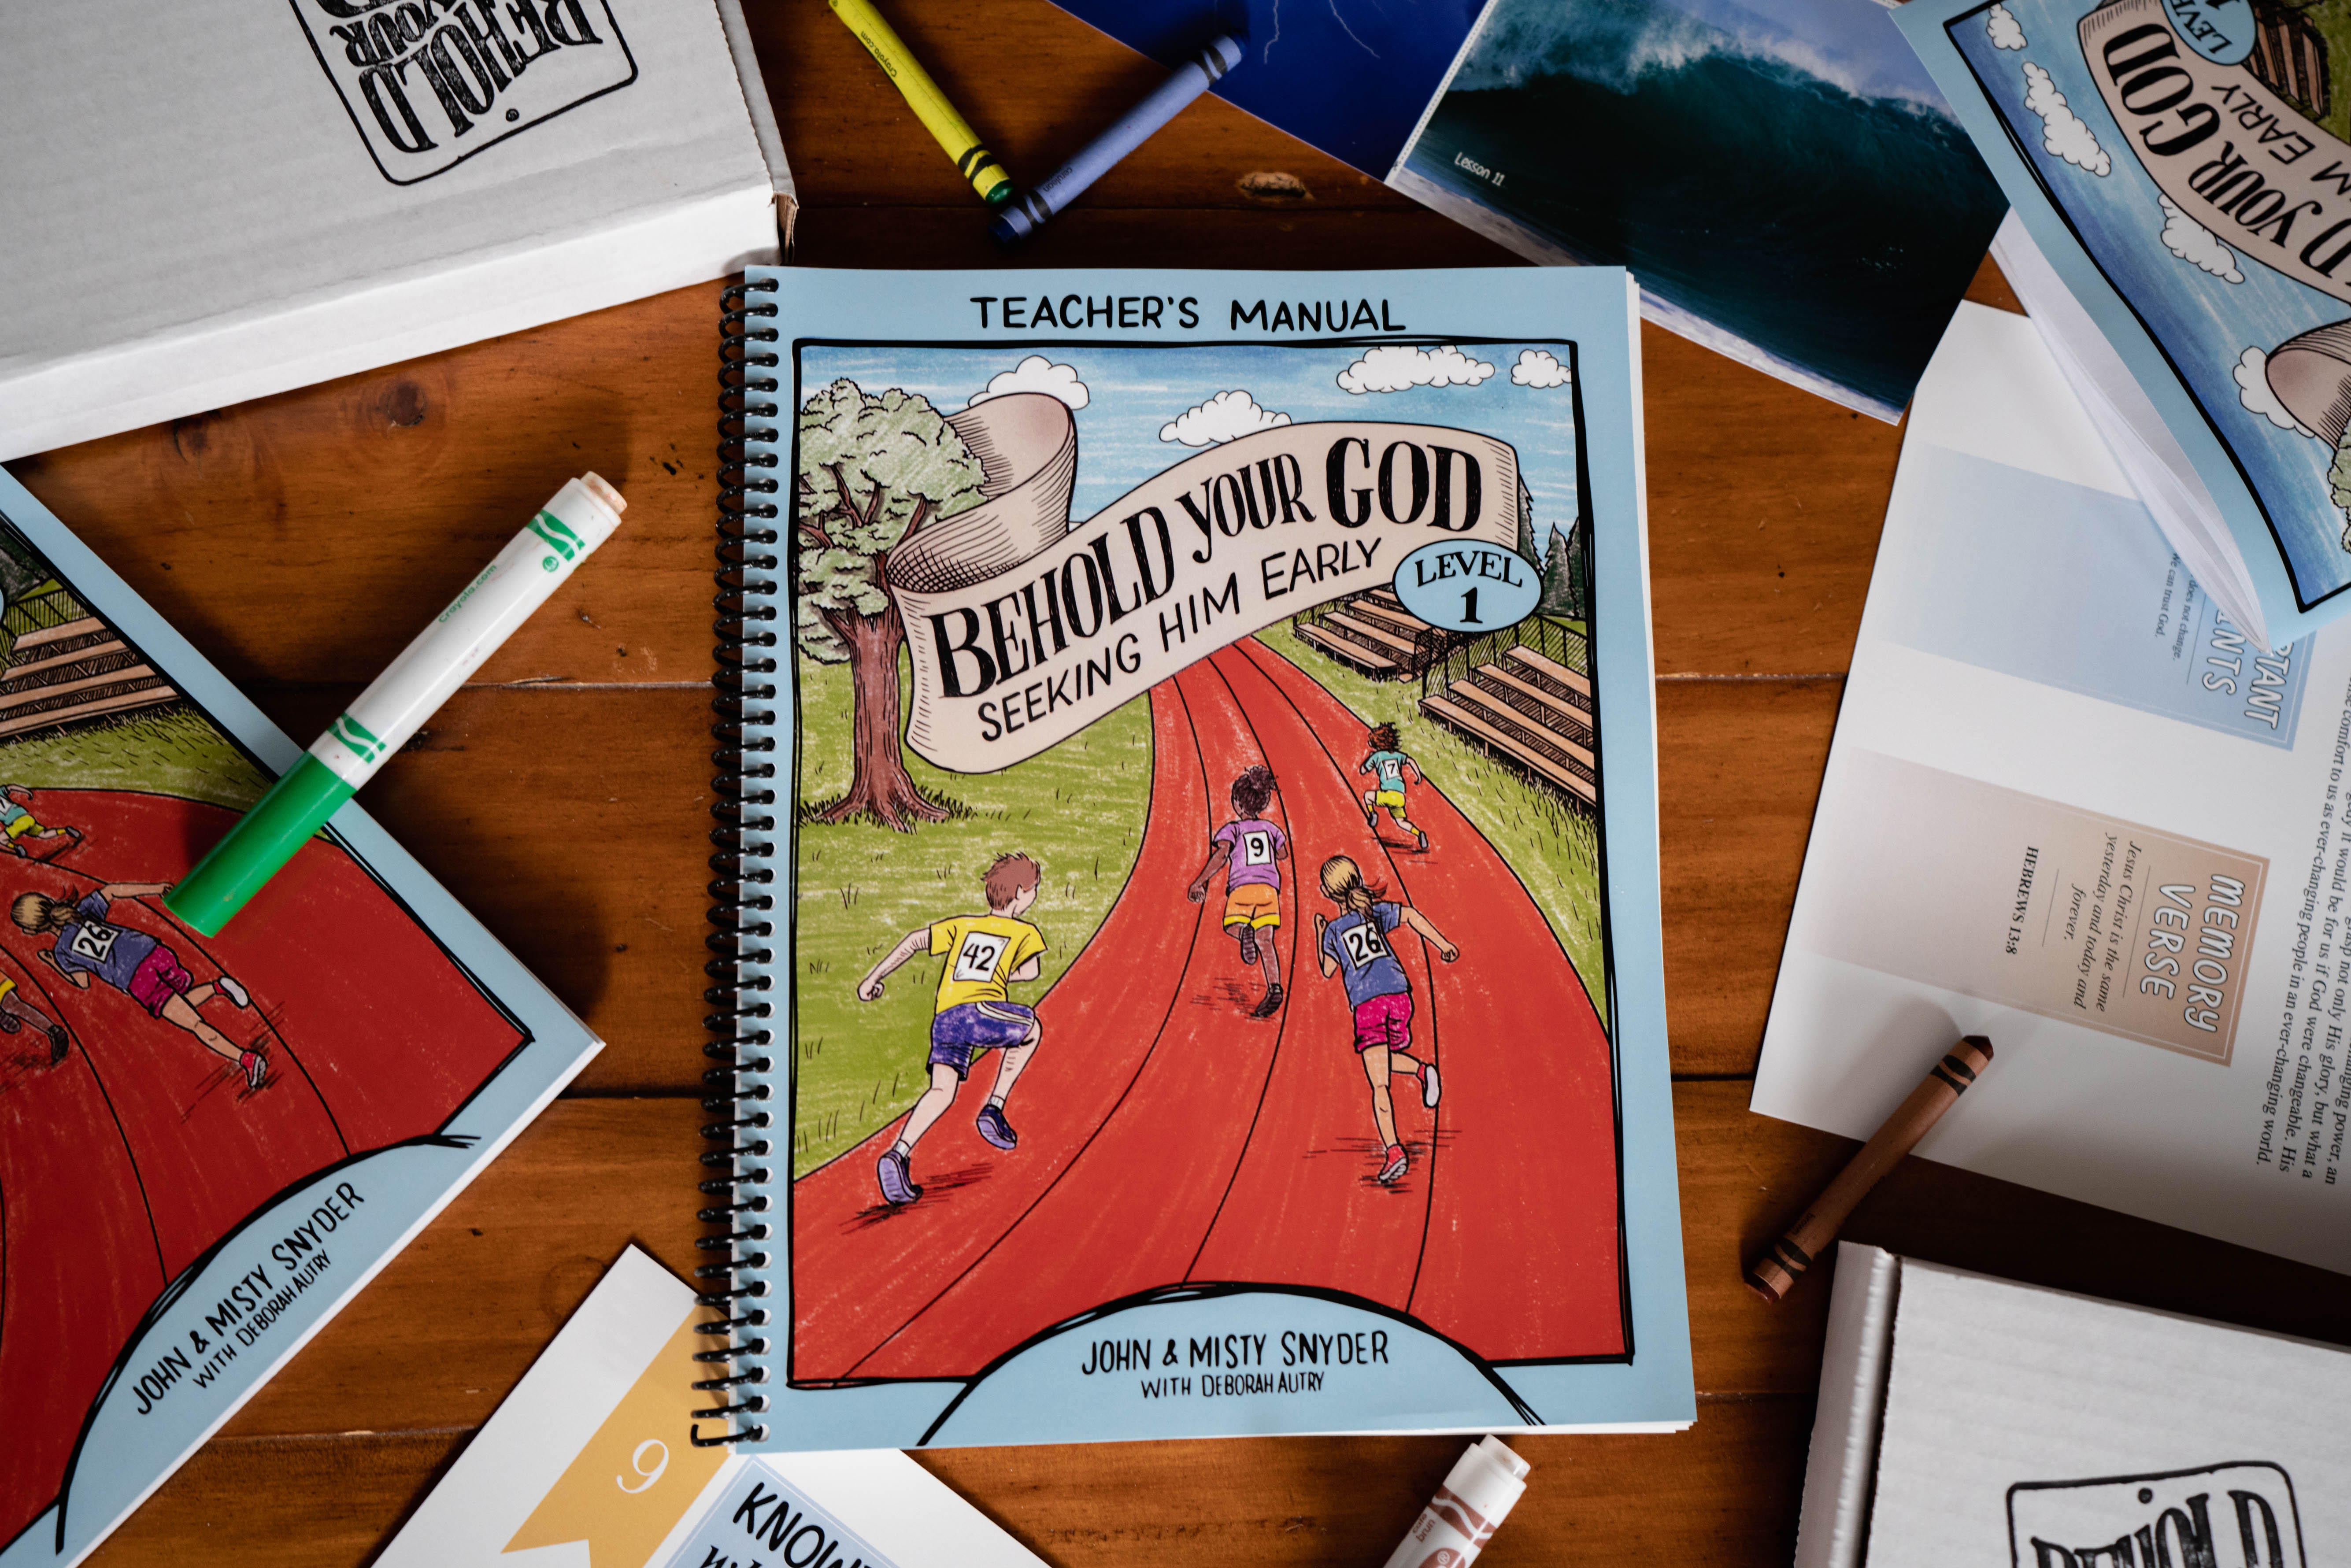 Behold Your God: Seeking Him Early Level 1 Teacher's Kit